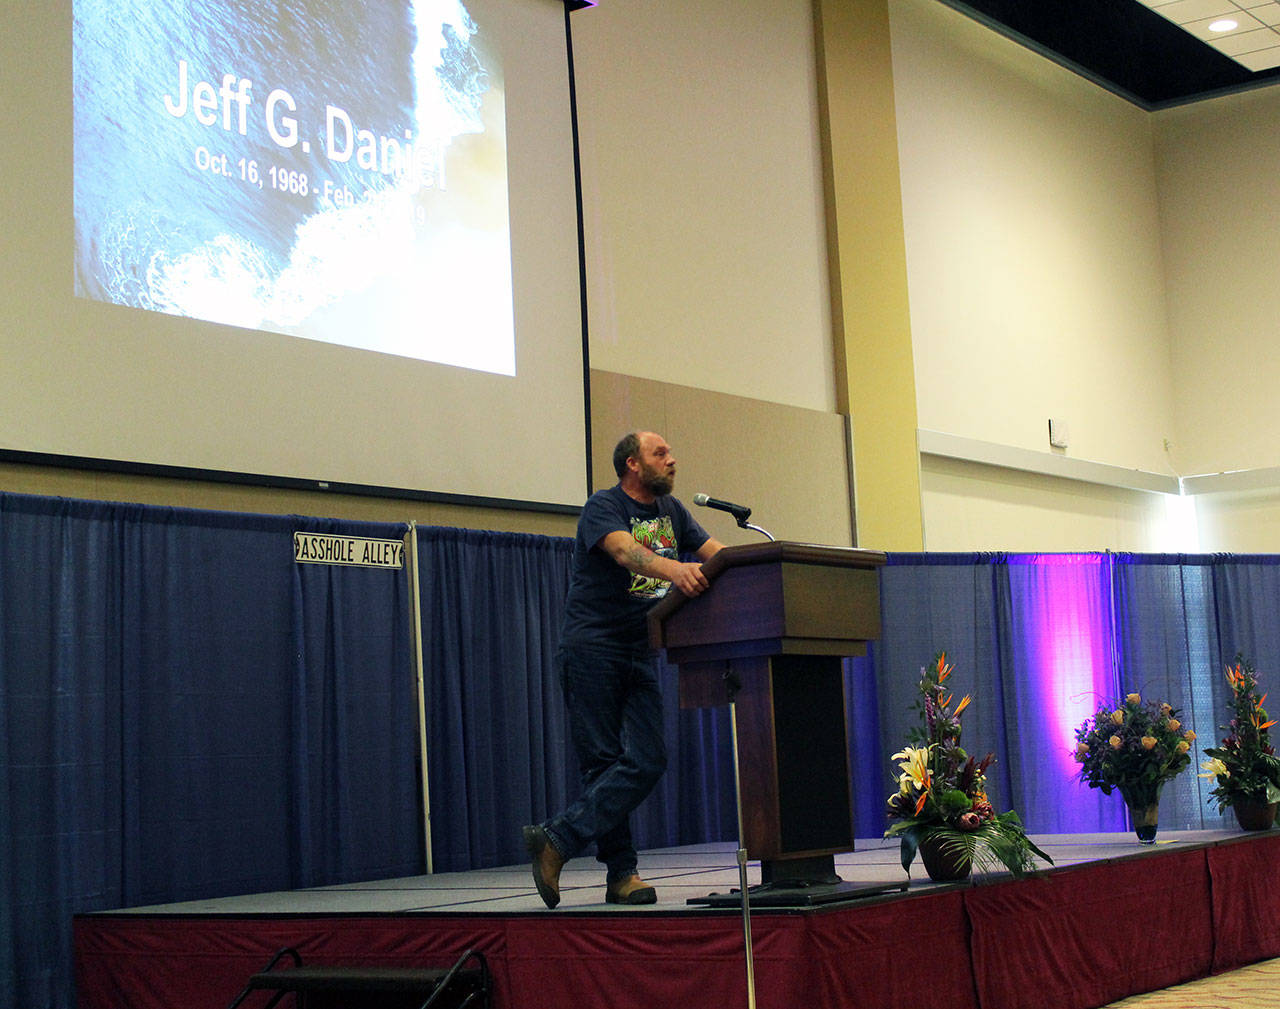 Hundreds gather to celebrate Jeff Daniel’s spirited legacy